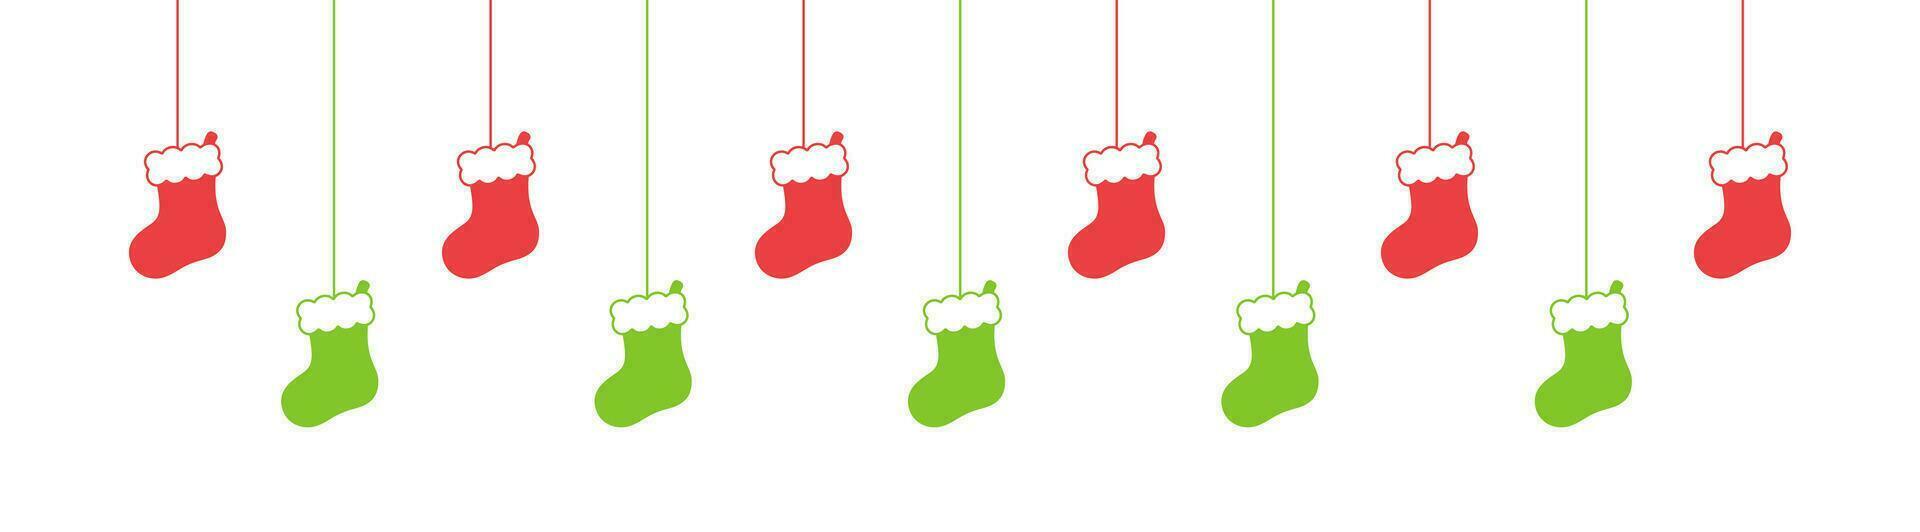 Merry Christmas Border Banner, Hanging Santa Stockings Garland. Winter Holiday Season Header Decoration. Web Banner Template. Vector illustration.